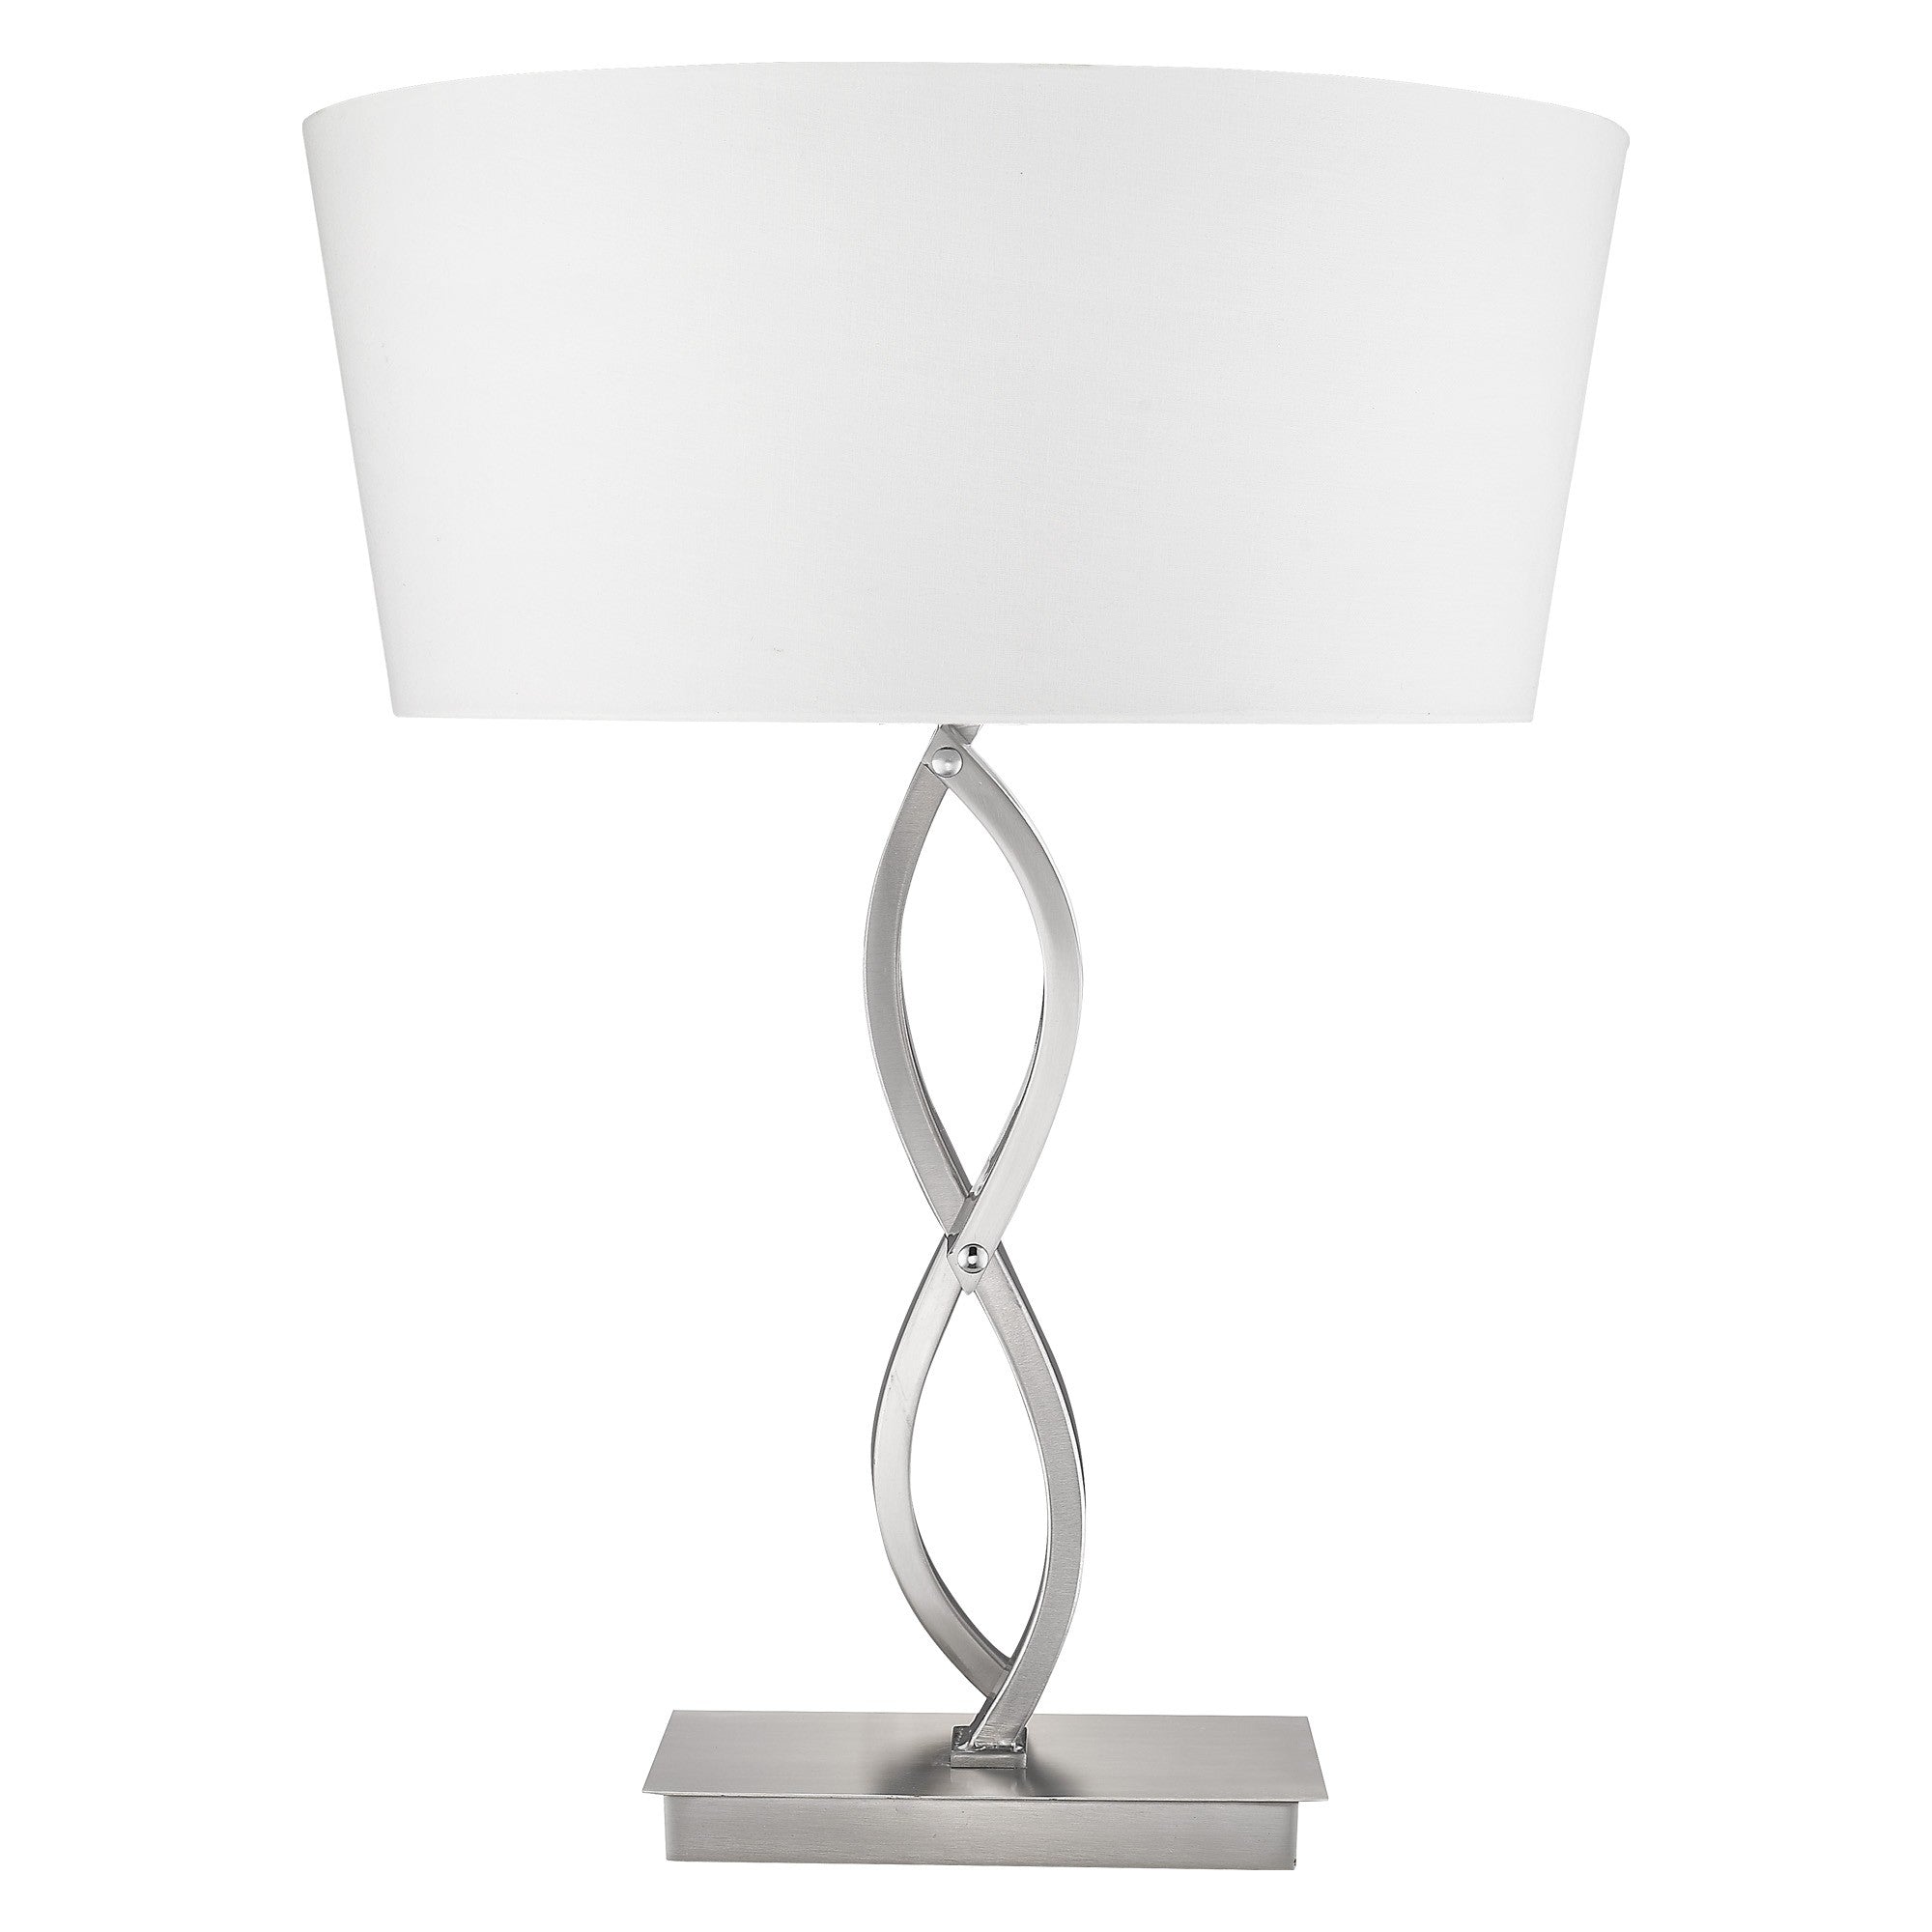 Trend Home 1-Light Satin Nickel Table Lamp